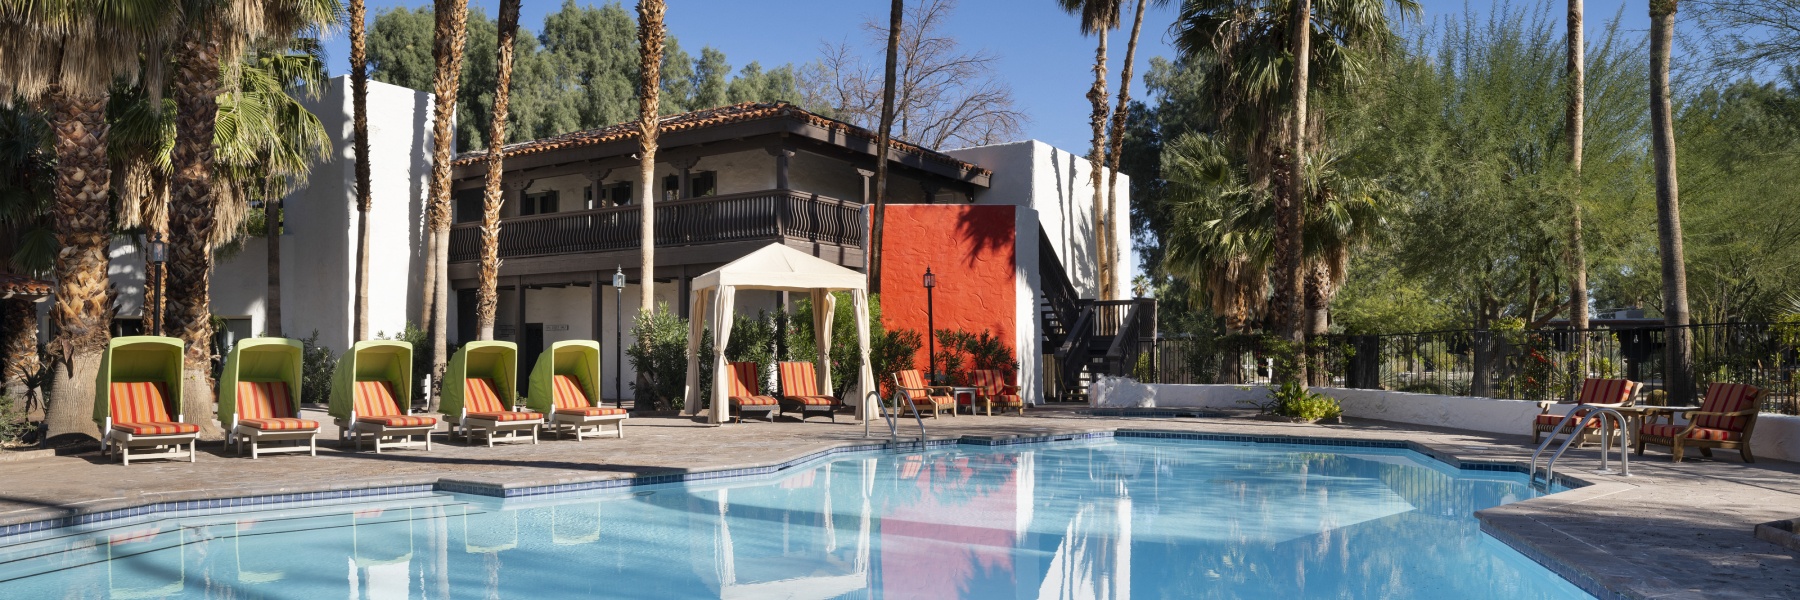 Pools at La Casa Del Zorro Resort & Spa, Borrego Springs, California